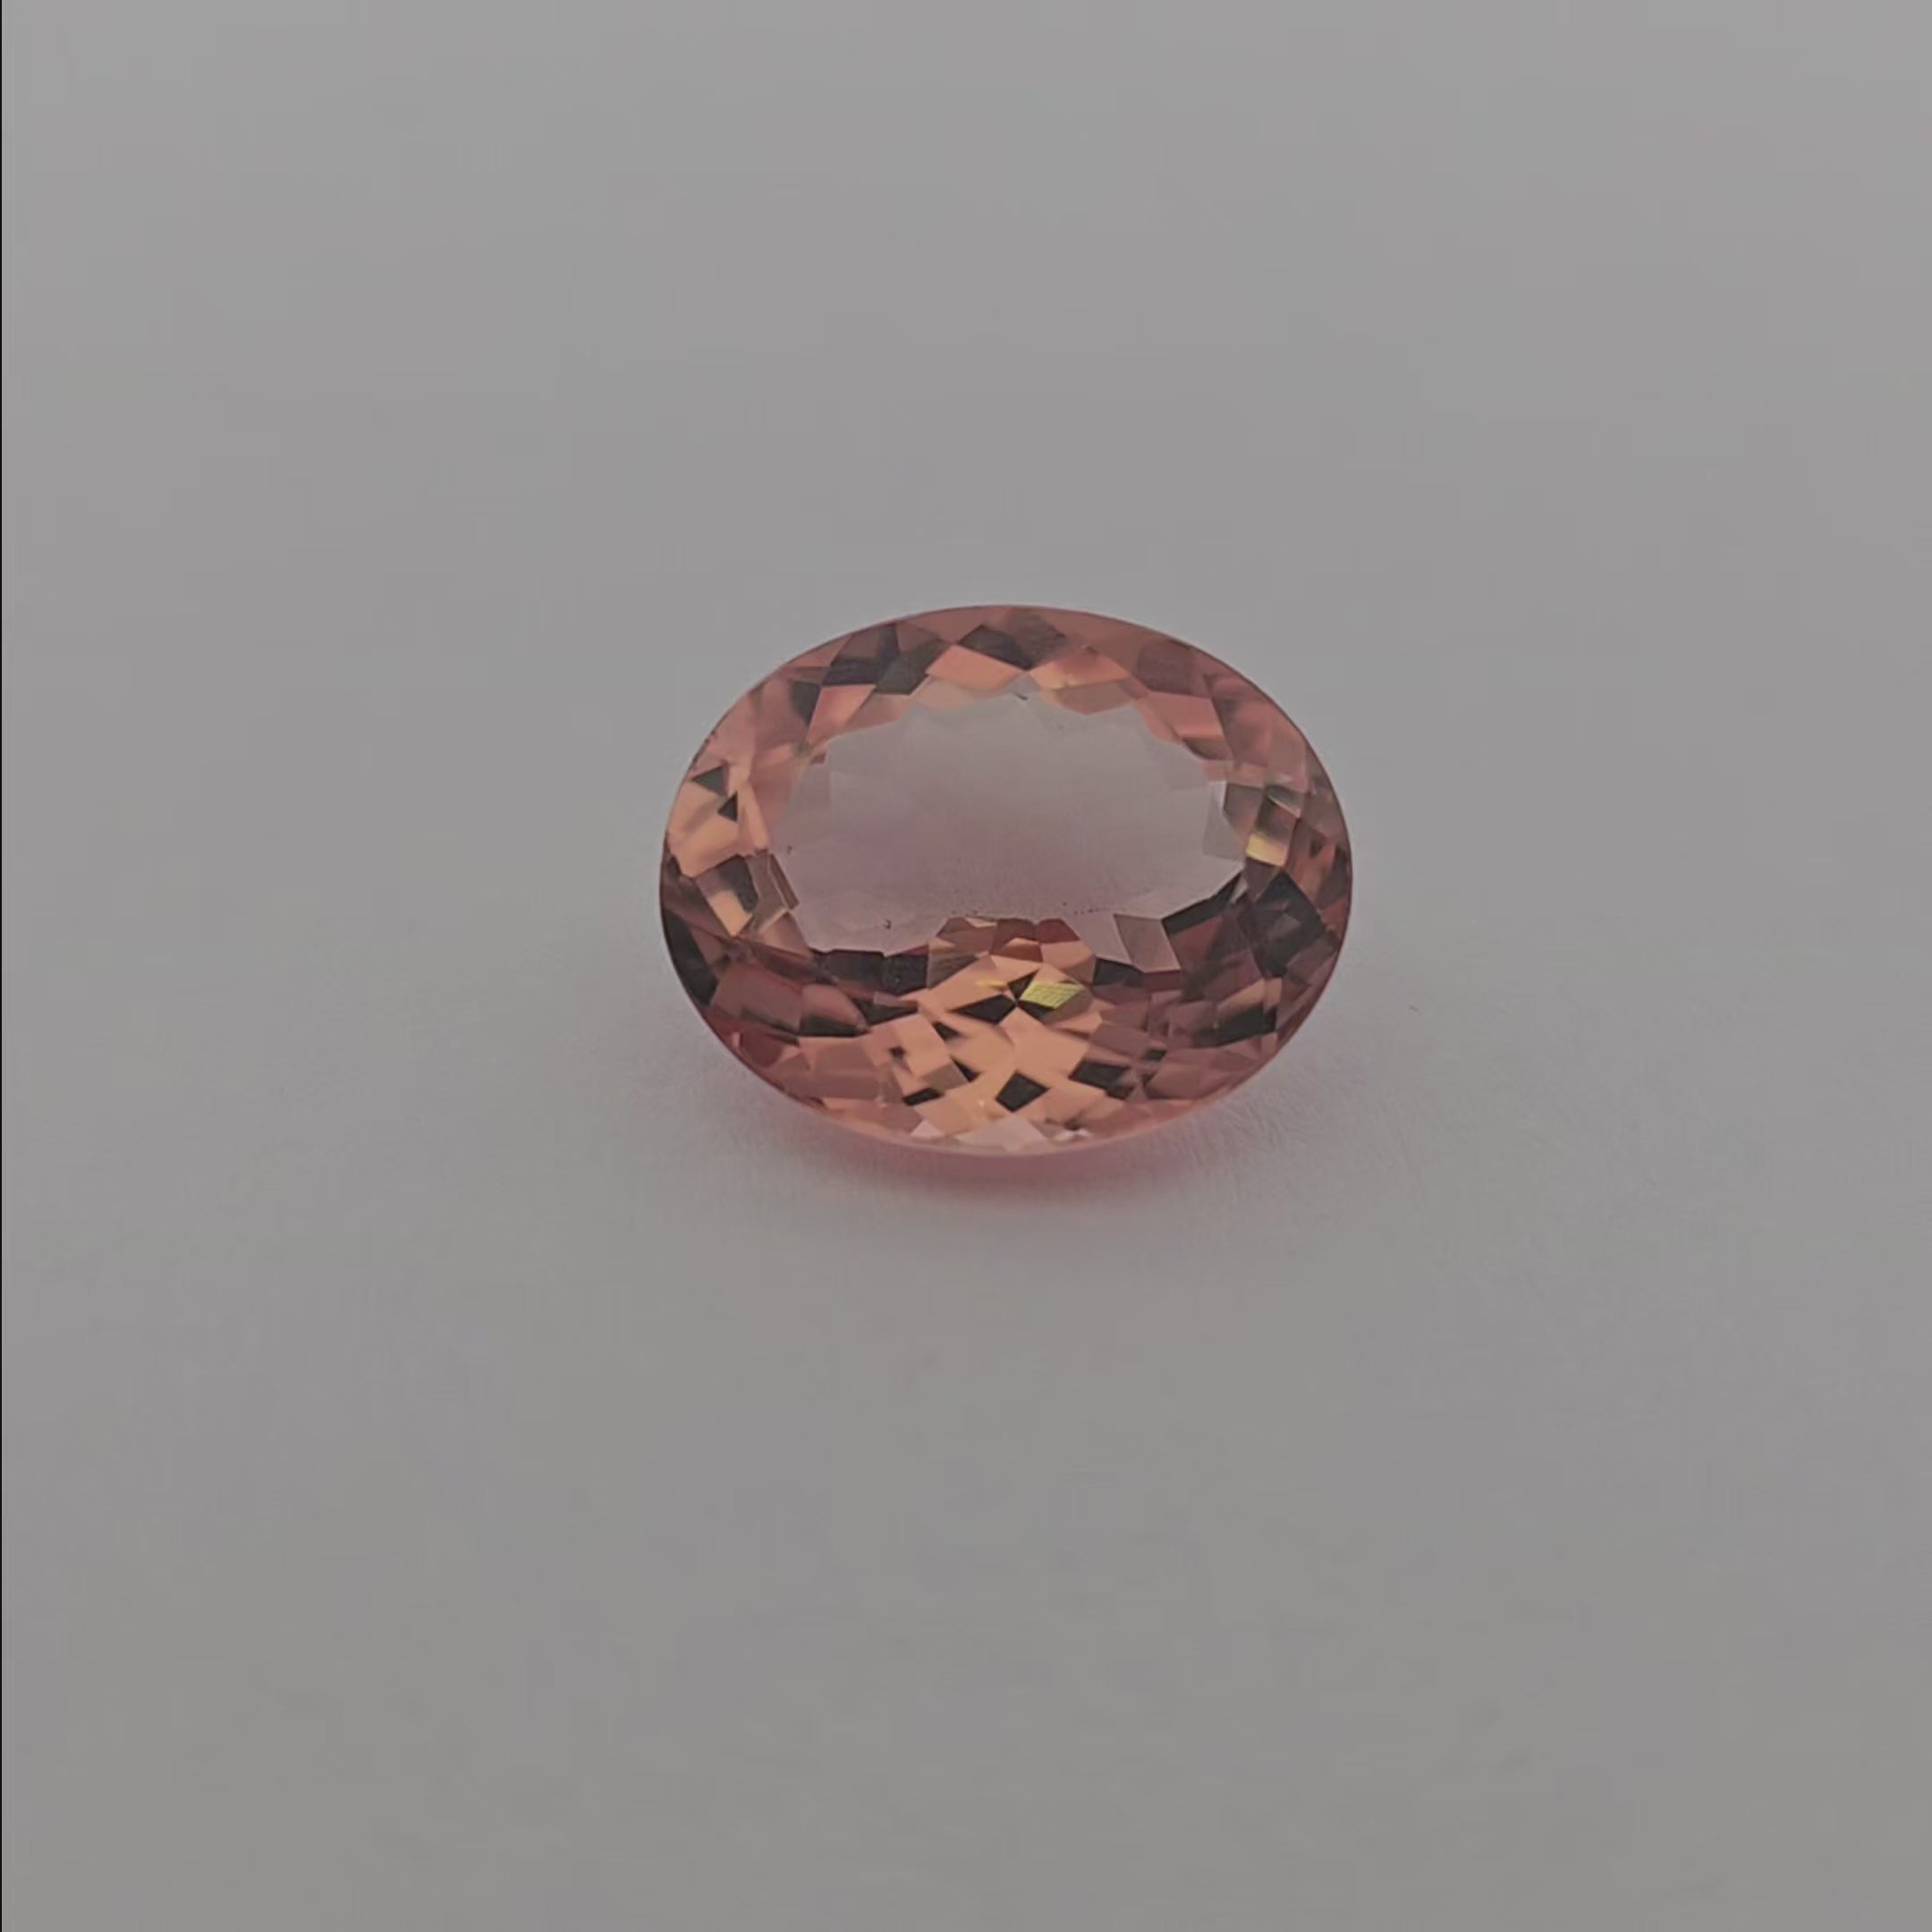 loose Natural Orange Tourmaline Stone 4.66 Carats Oval Cut (12x10 mm)